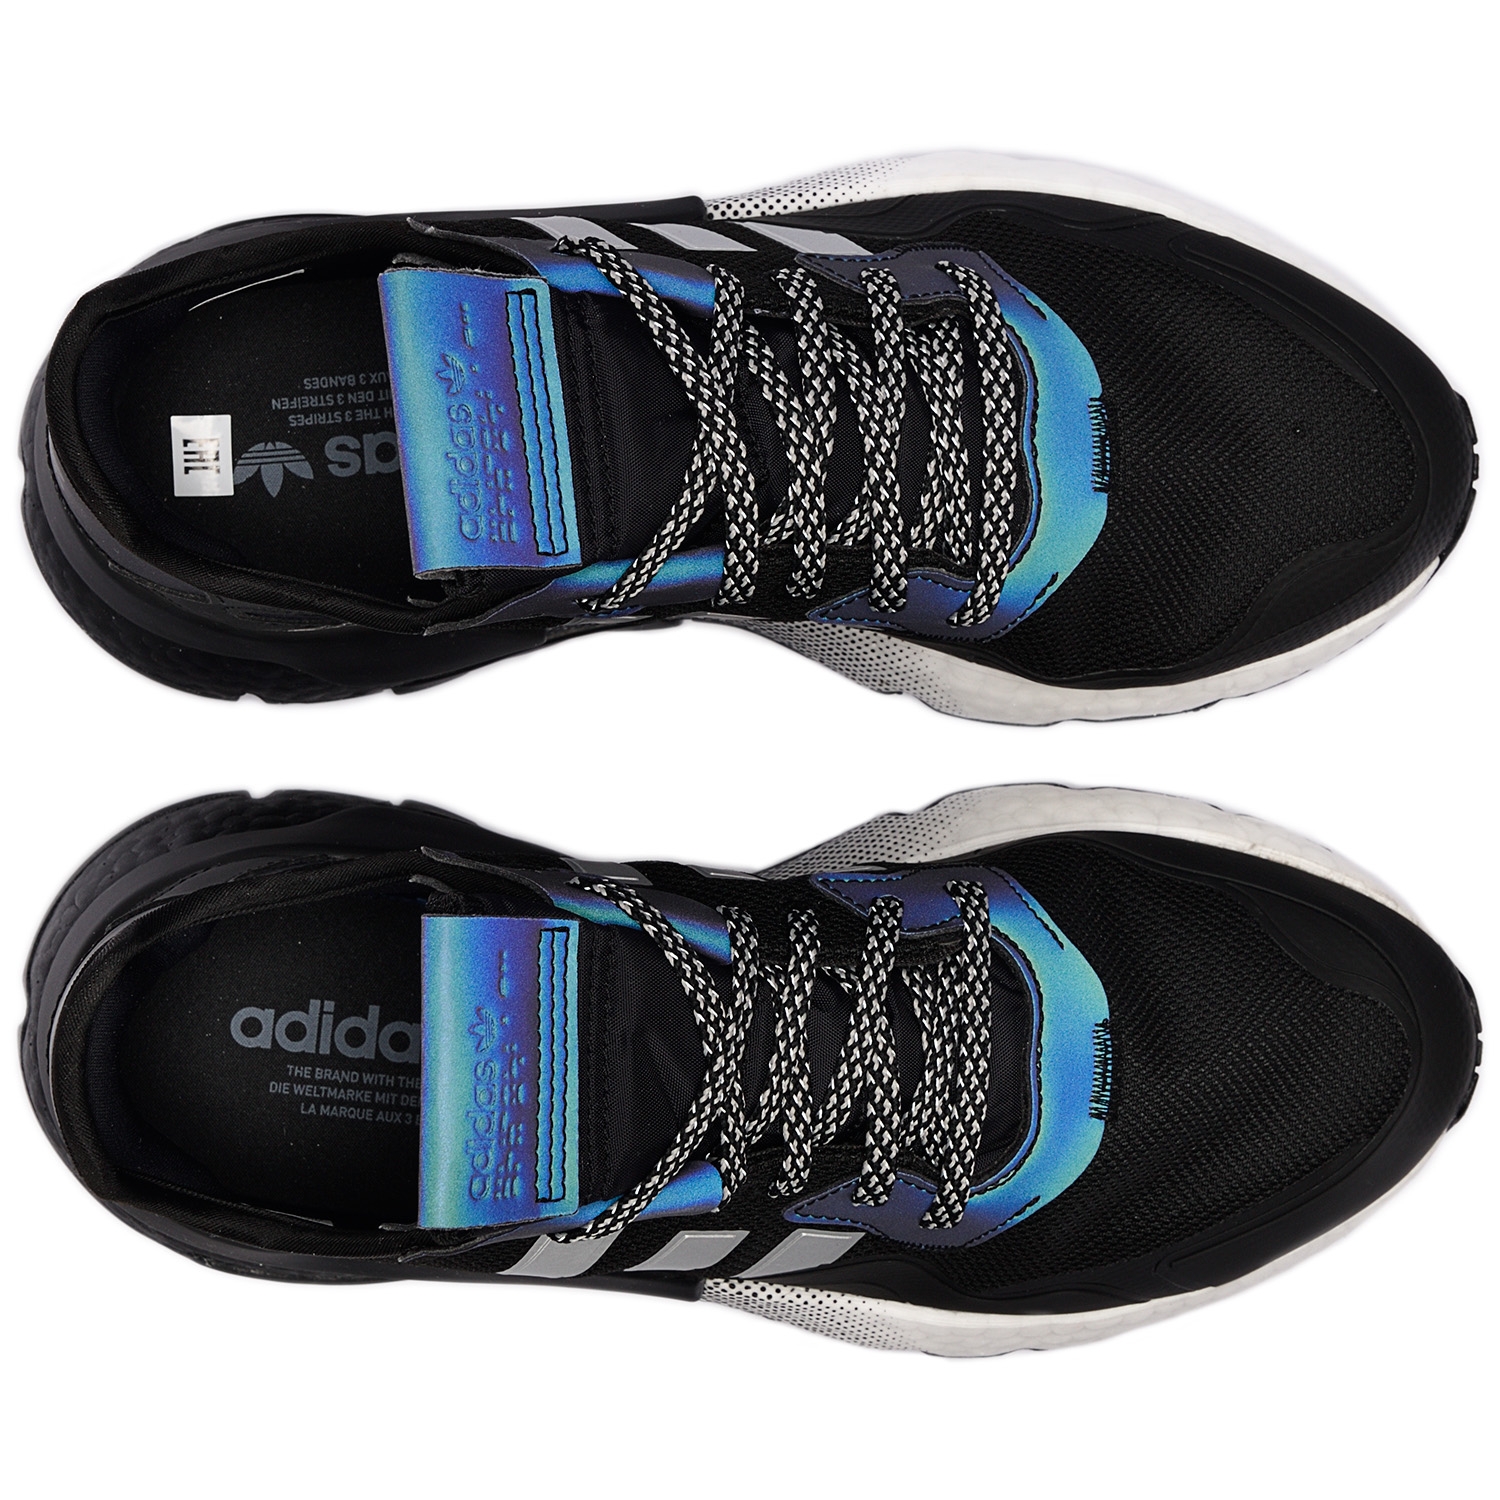 adidas Originals Nite Jogger core black / silver met. / ftwr white